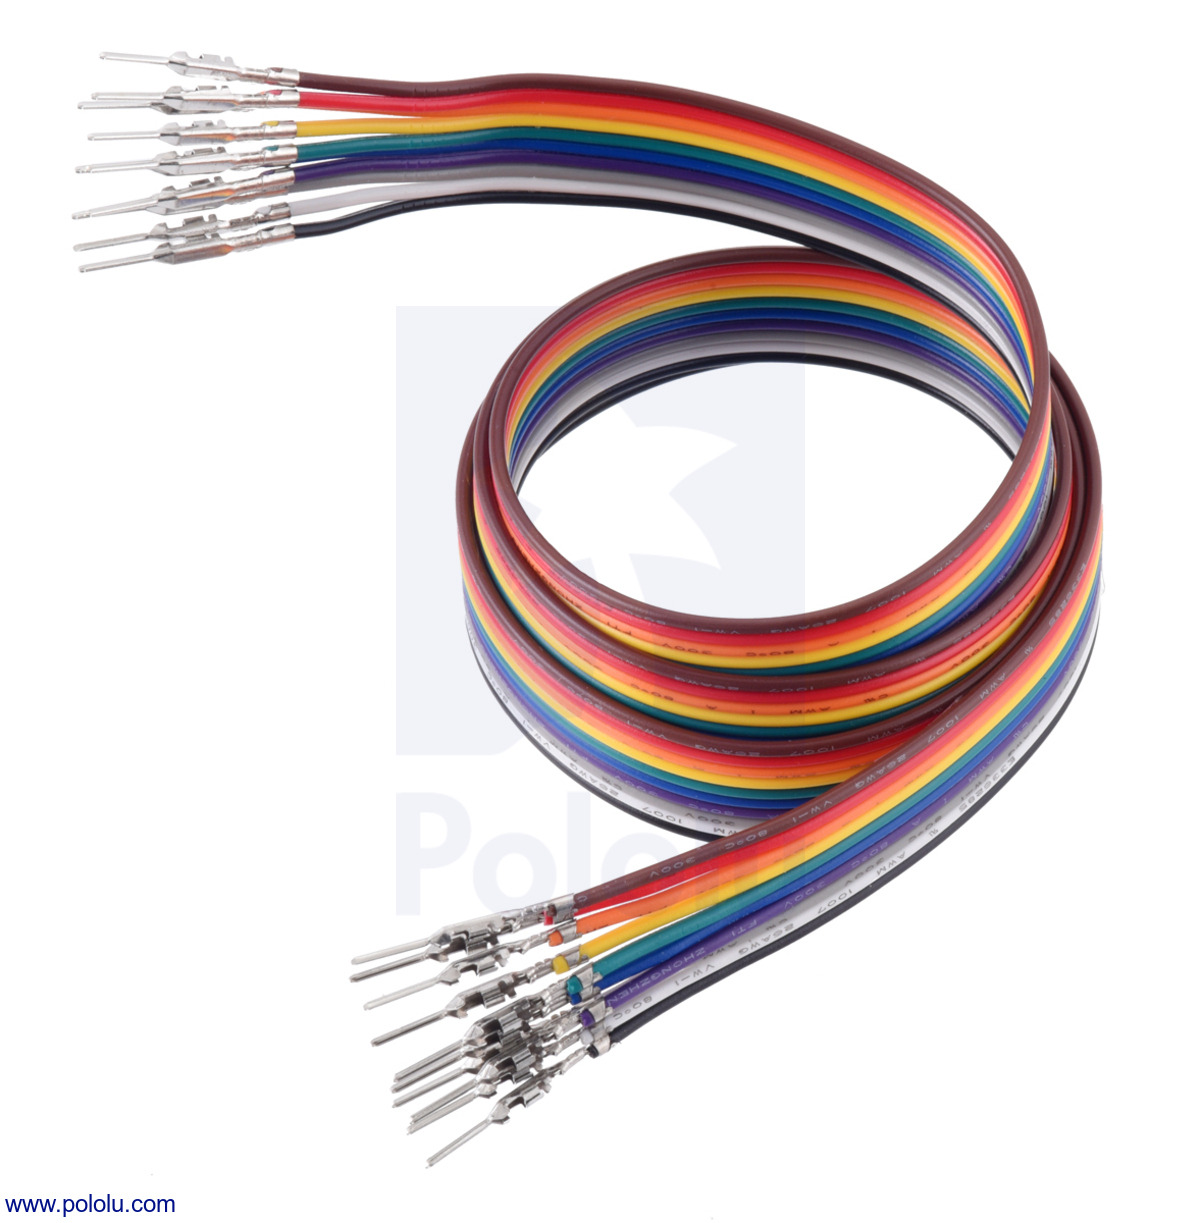 Ribbon Cable with Pre-Crimped Terminals 10-Color M-M 24 (60 cm)